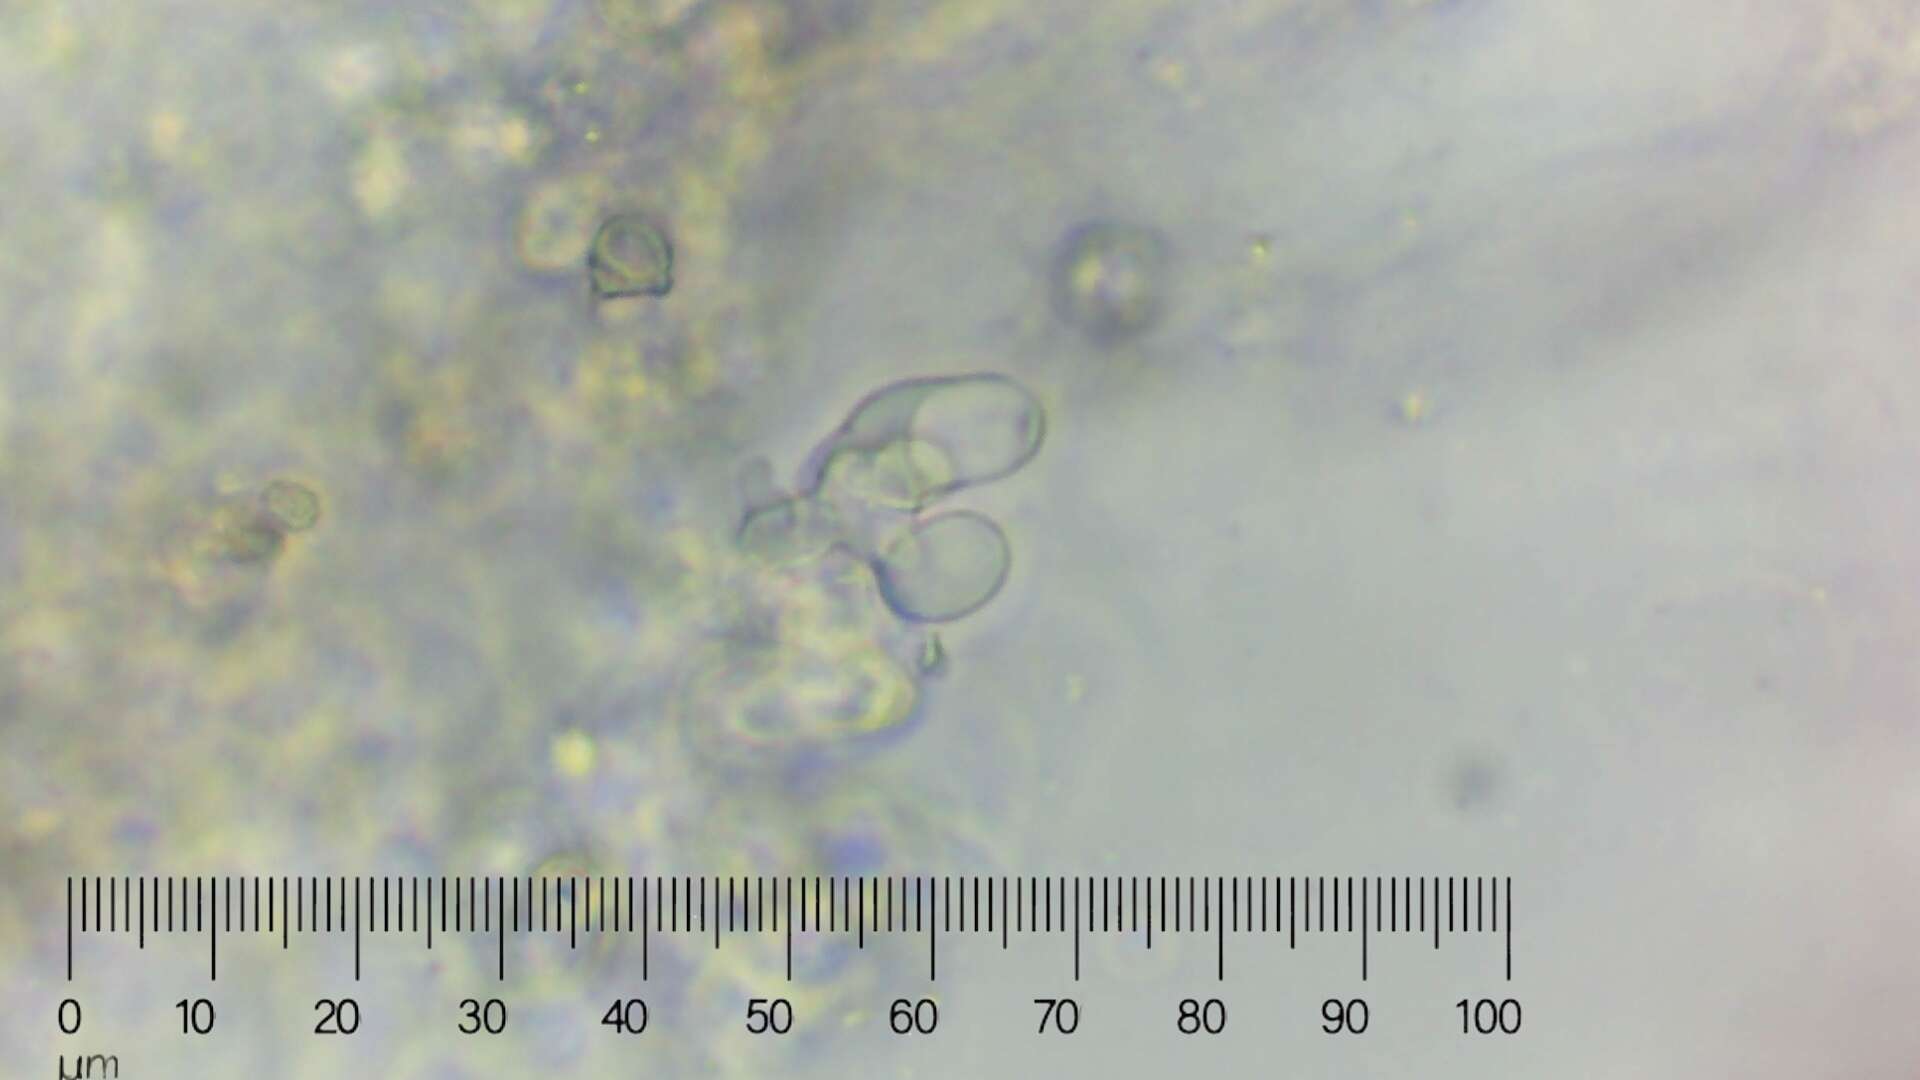 Image de Trechispora hymenocystis (Berk. & Broome) K. H. Larss. 1994